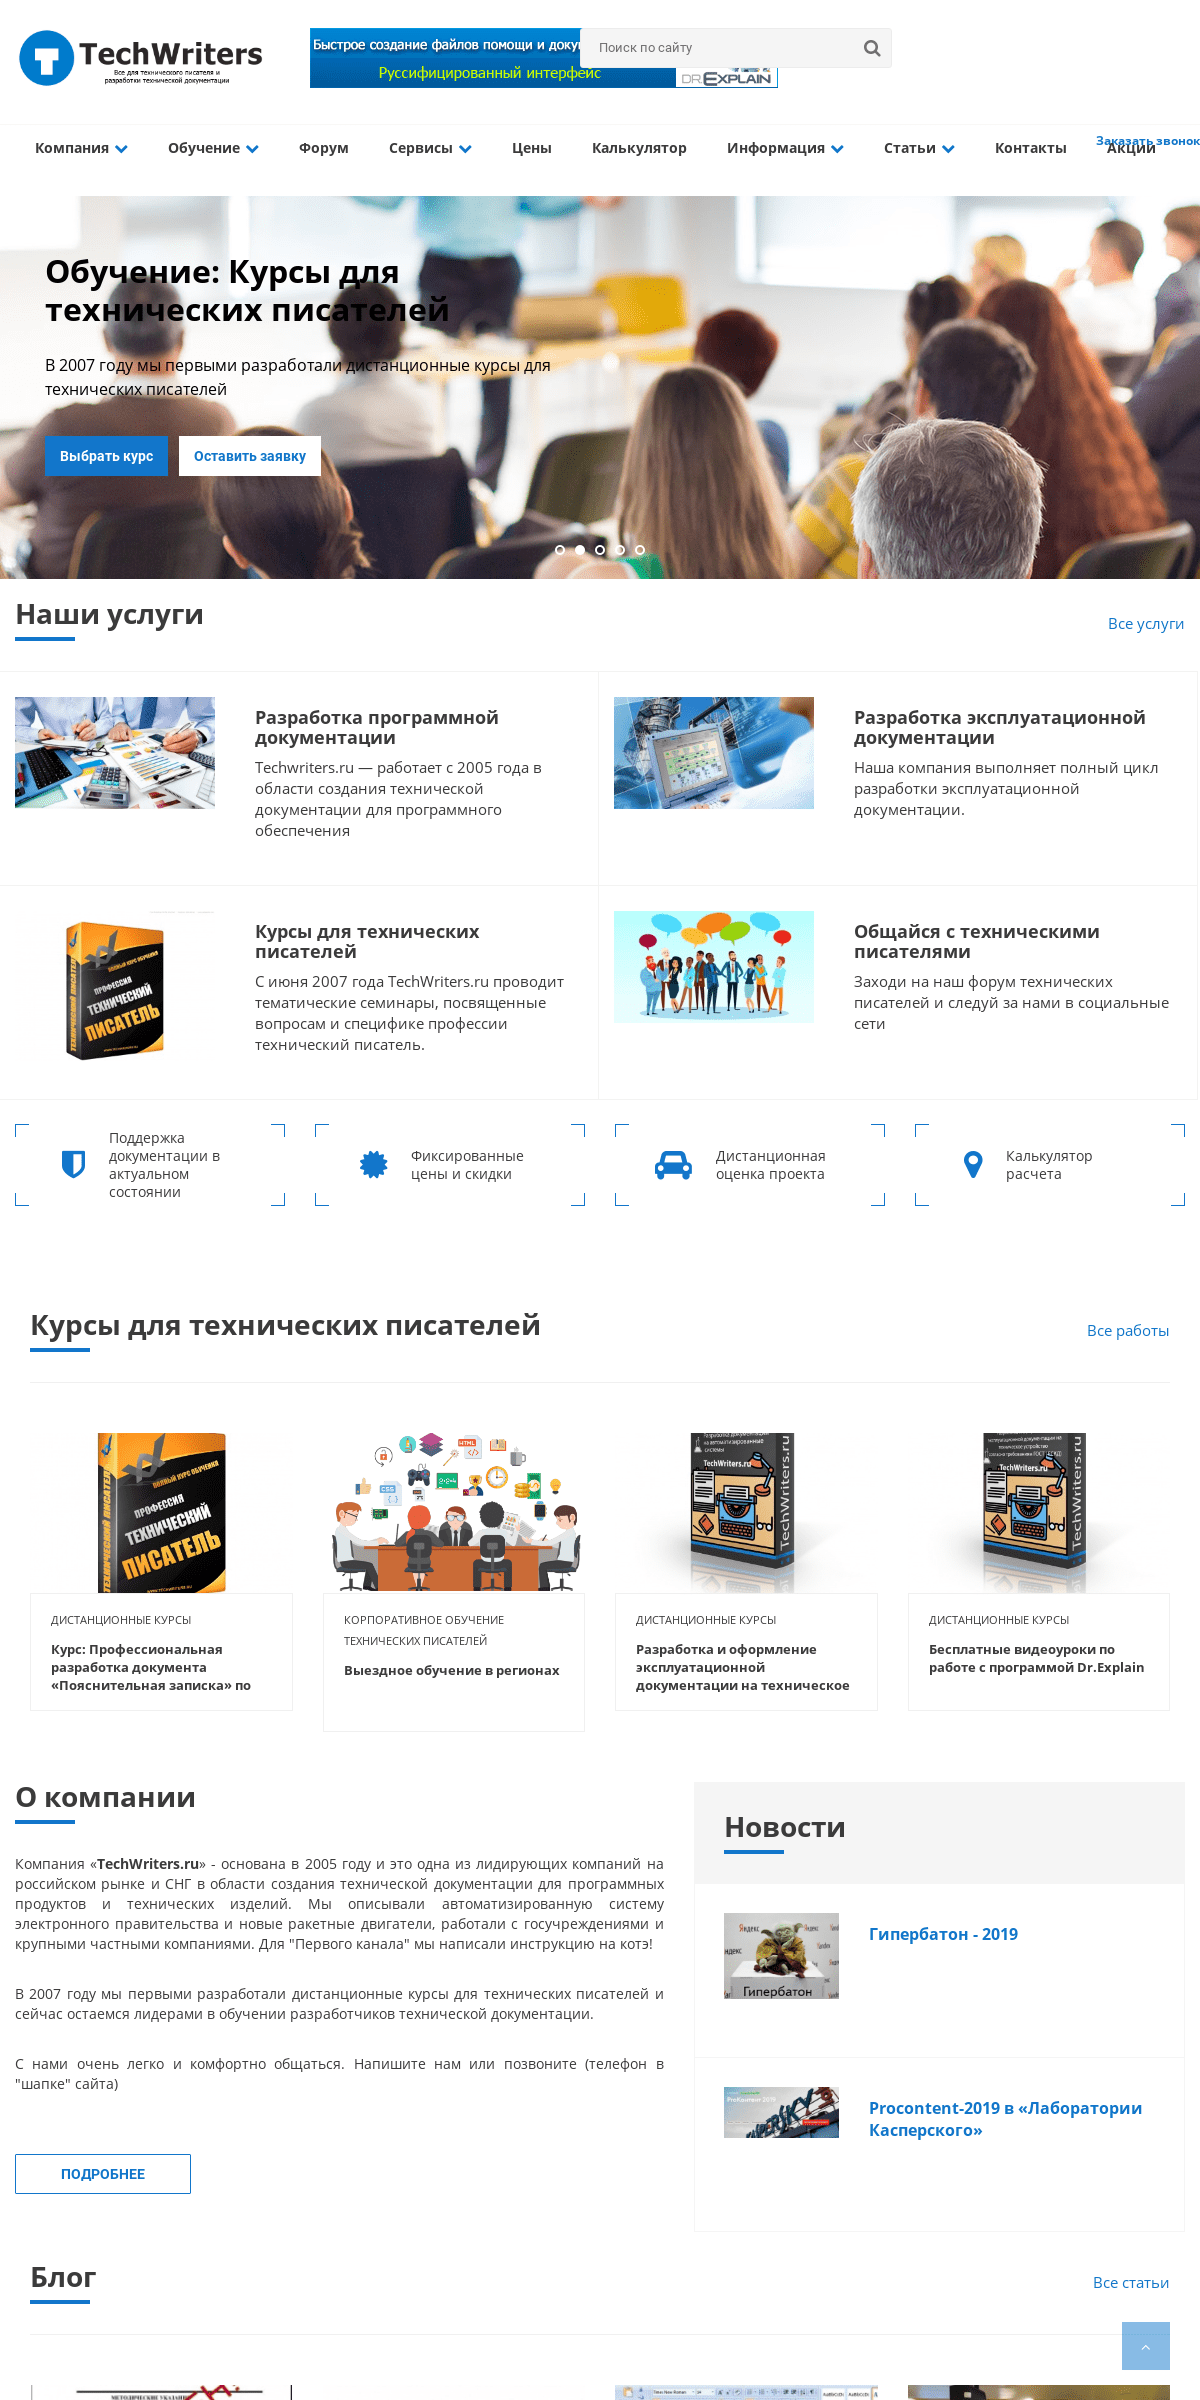 A complete backup of techwriters.ru